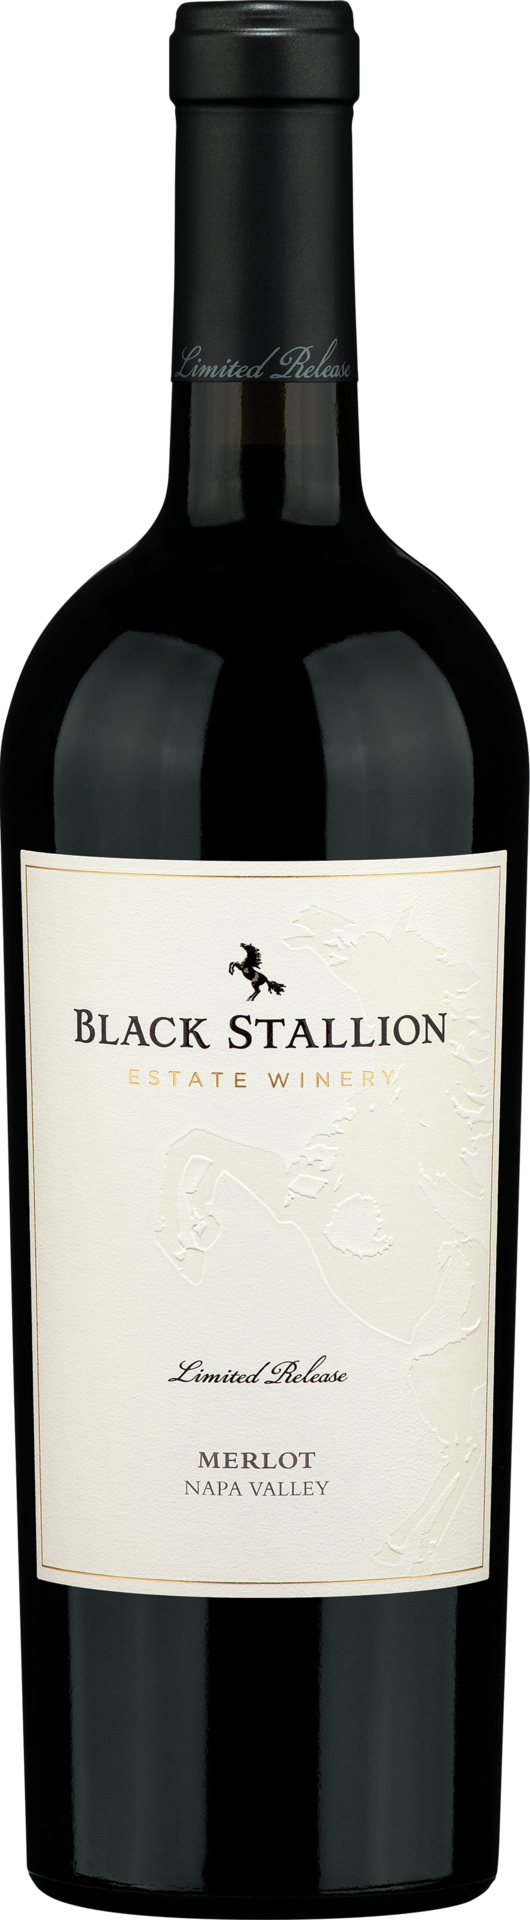 Black Stallion Limited Release - 2020